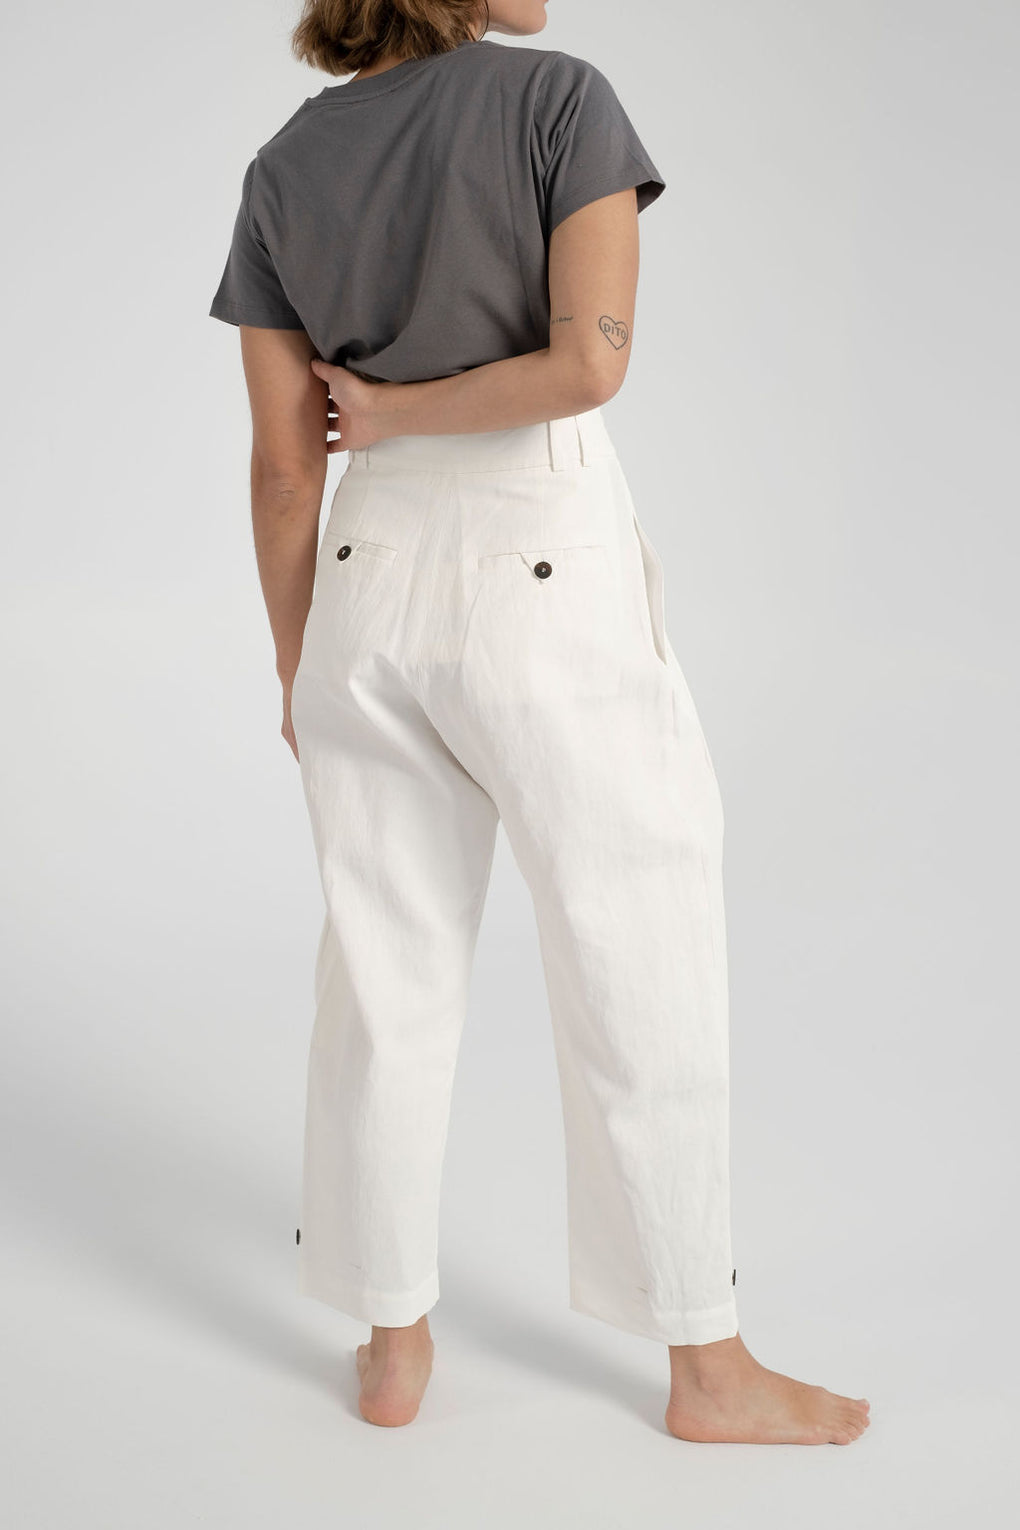 Studio Nicholson-Bag Pants-white linen pants-Idun-St. Paul